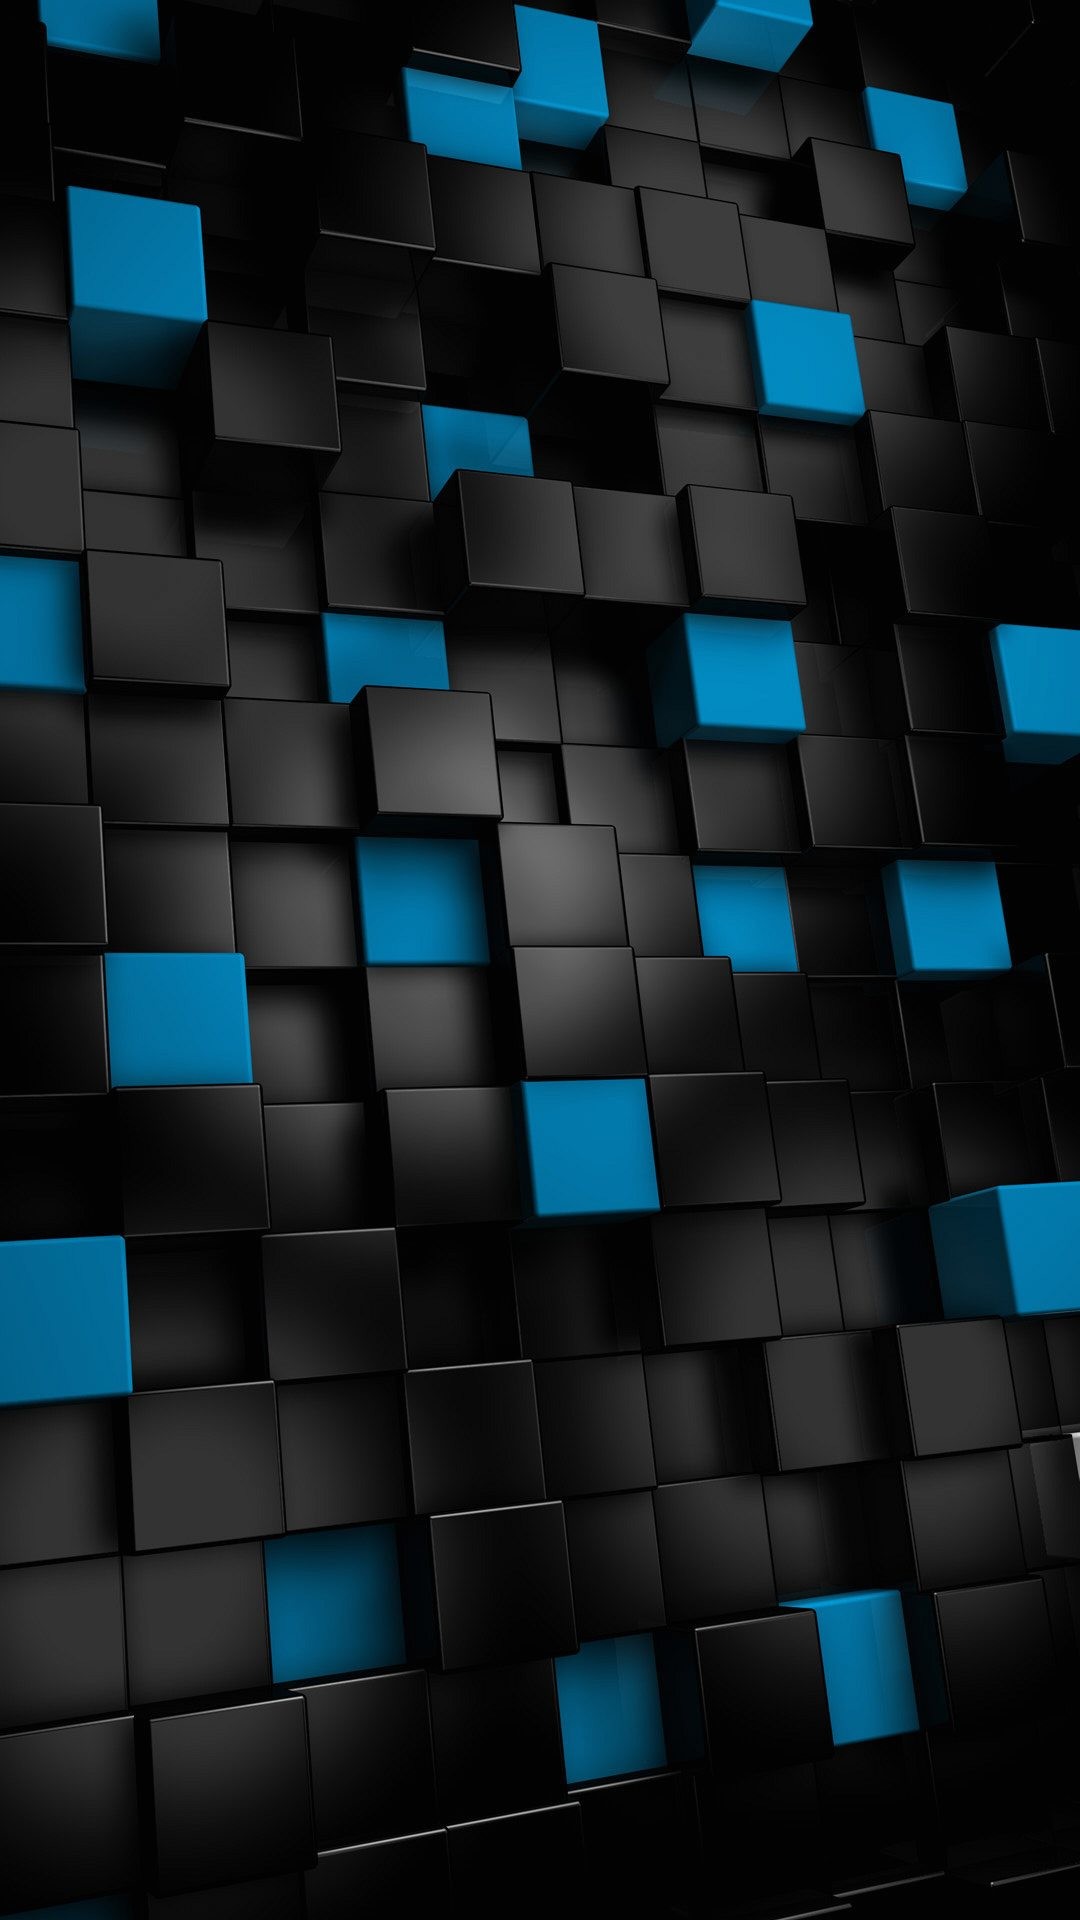 Wallpaper full hd 1080 x 1920 smartphone 3d cubes black blue